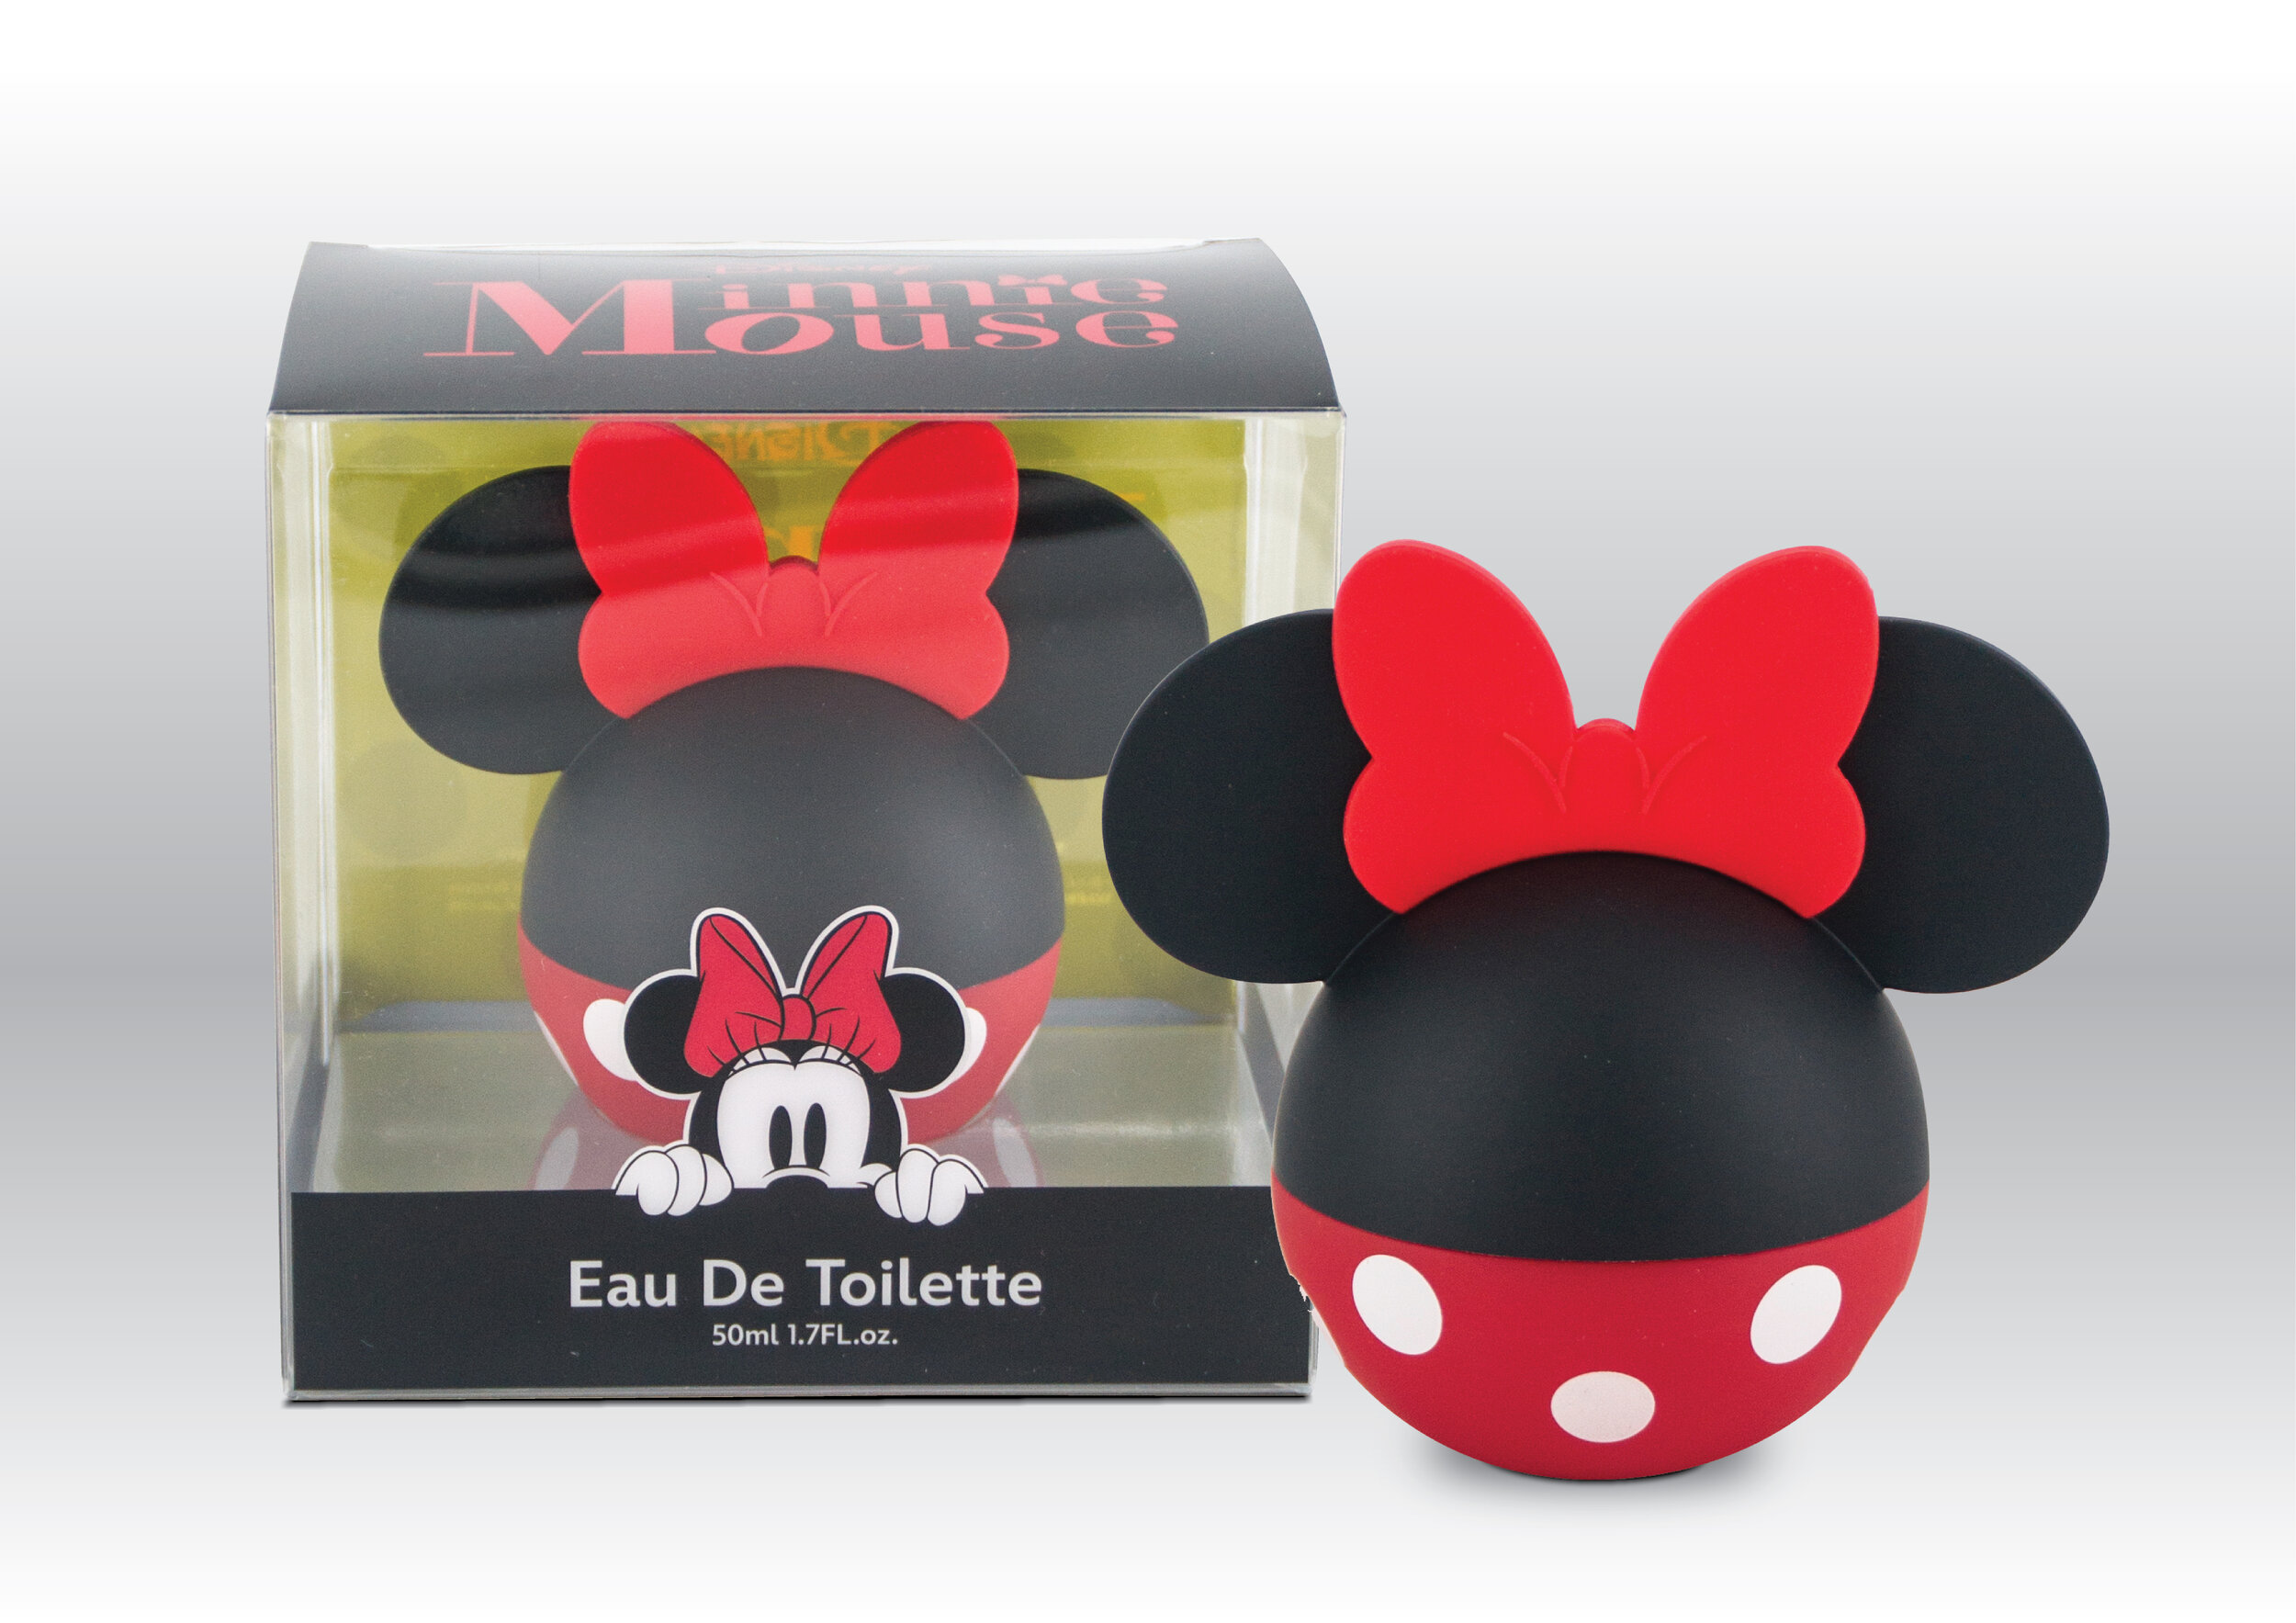 Minnie Mouse Perfume  Disney Minnie Mouse Fragrance Gift Set